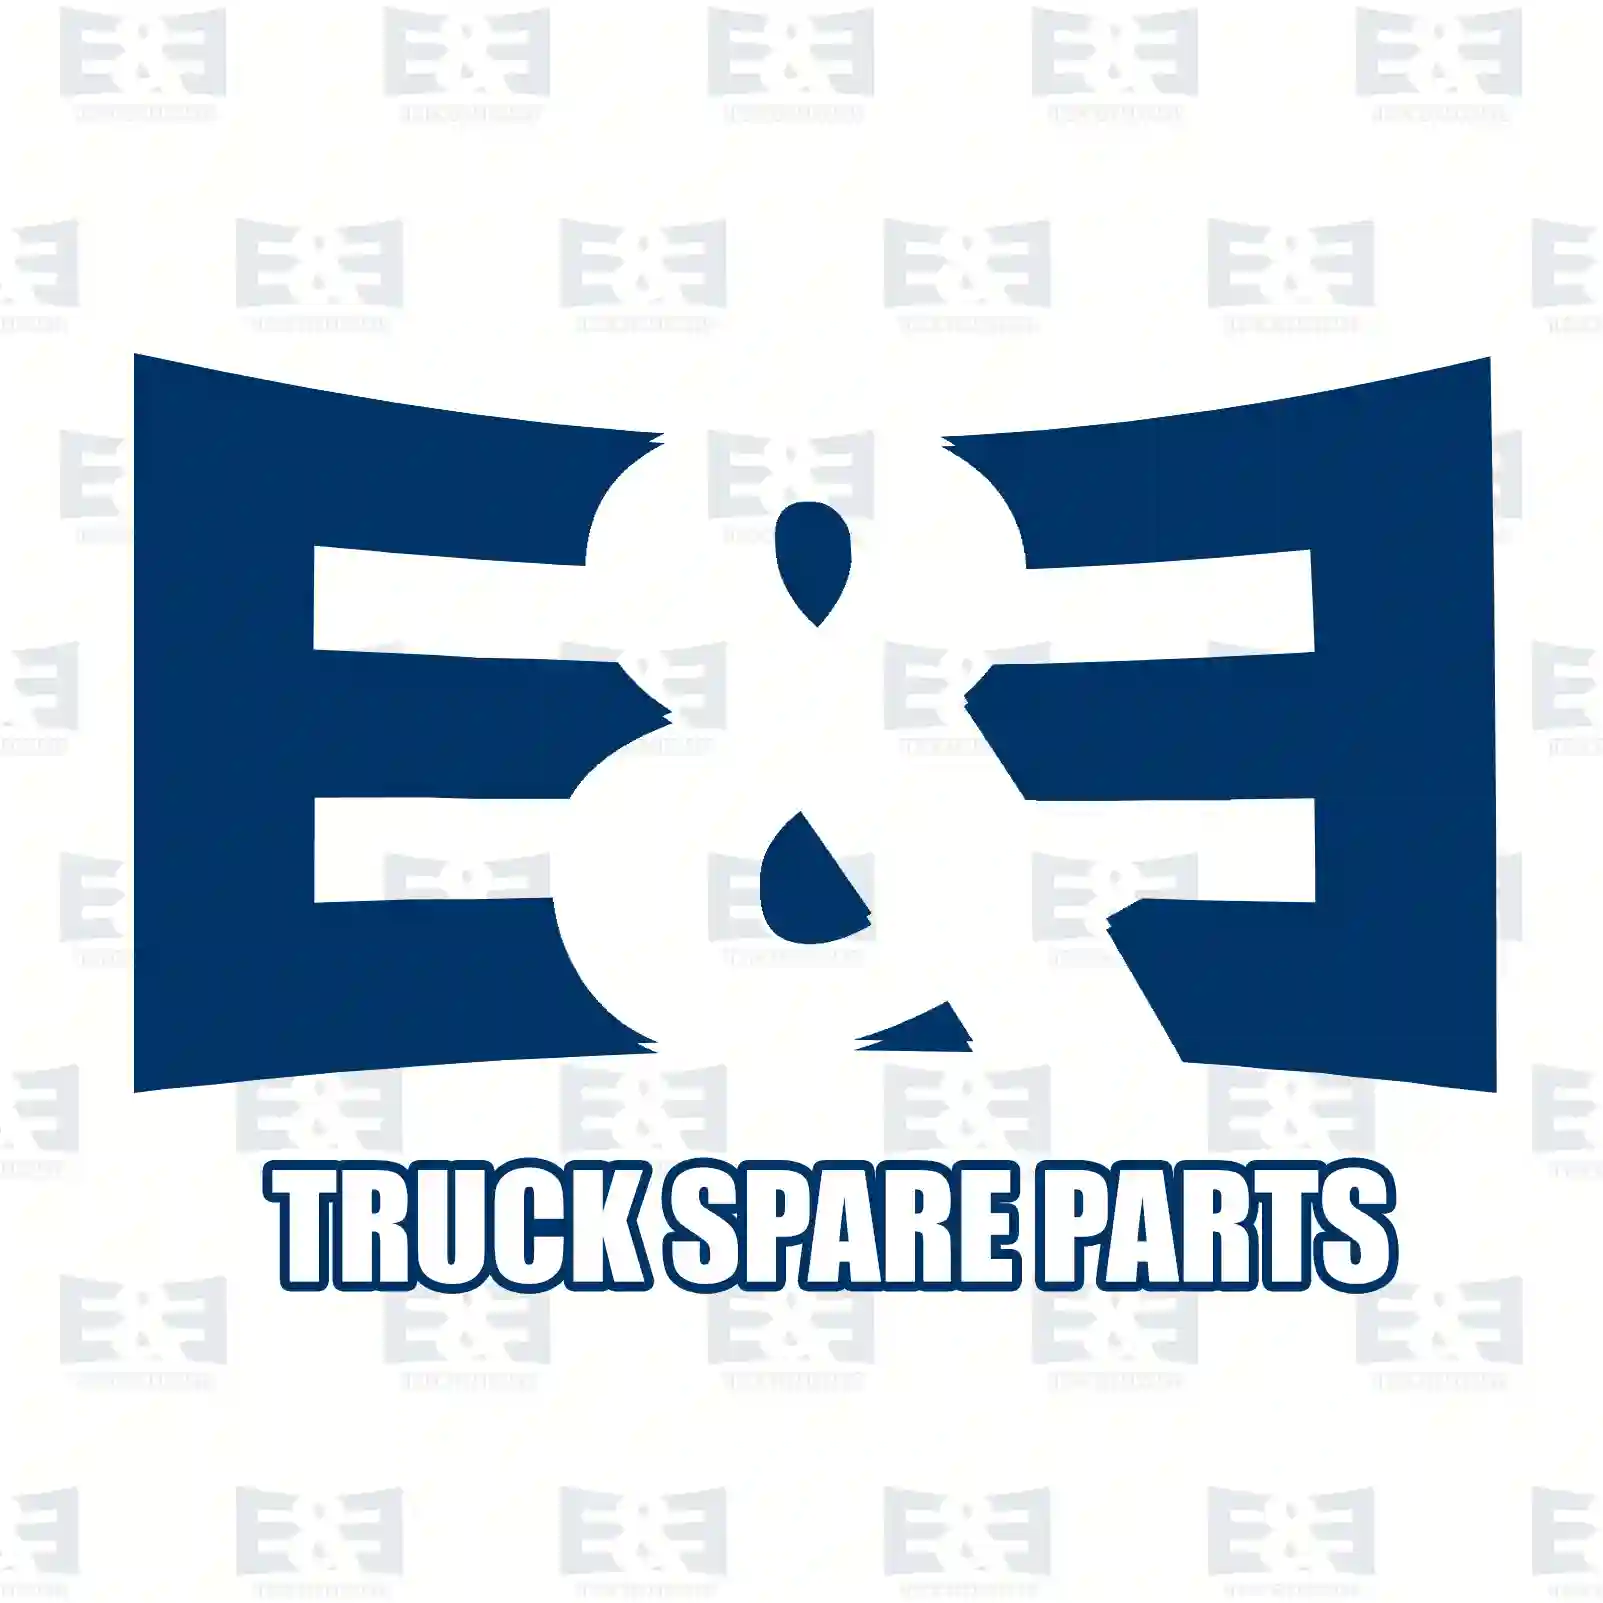 Disc brake pad kit, without accessories, 2E2294553, 41060-G490A, 5000295329, 5000815574, 5000823566, 5001834527, 5001842048, 7701203700, 7701203895, 7701203917 ||  2E2294553 E&E Truck Spare Parts | Truck Spare Parts, Auotomotive Spare Parts Disc brake pad kit, without accessories, 2E2294553, 41060-G490A, 5000295329, 5000815574, 5000823566, 5001834527, 5001842048, 7701203700, 7701203895, 7701203917 ||  2E2294553 E&E Truck Spare Parts | Truck Spare Parts, Auotomotive Spare Parts